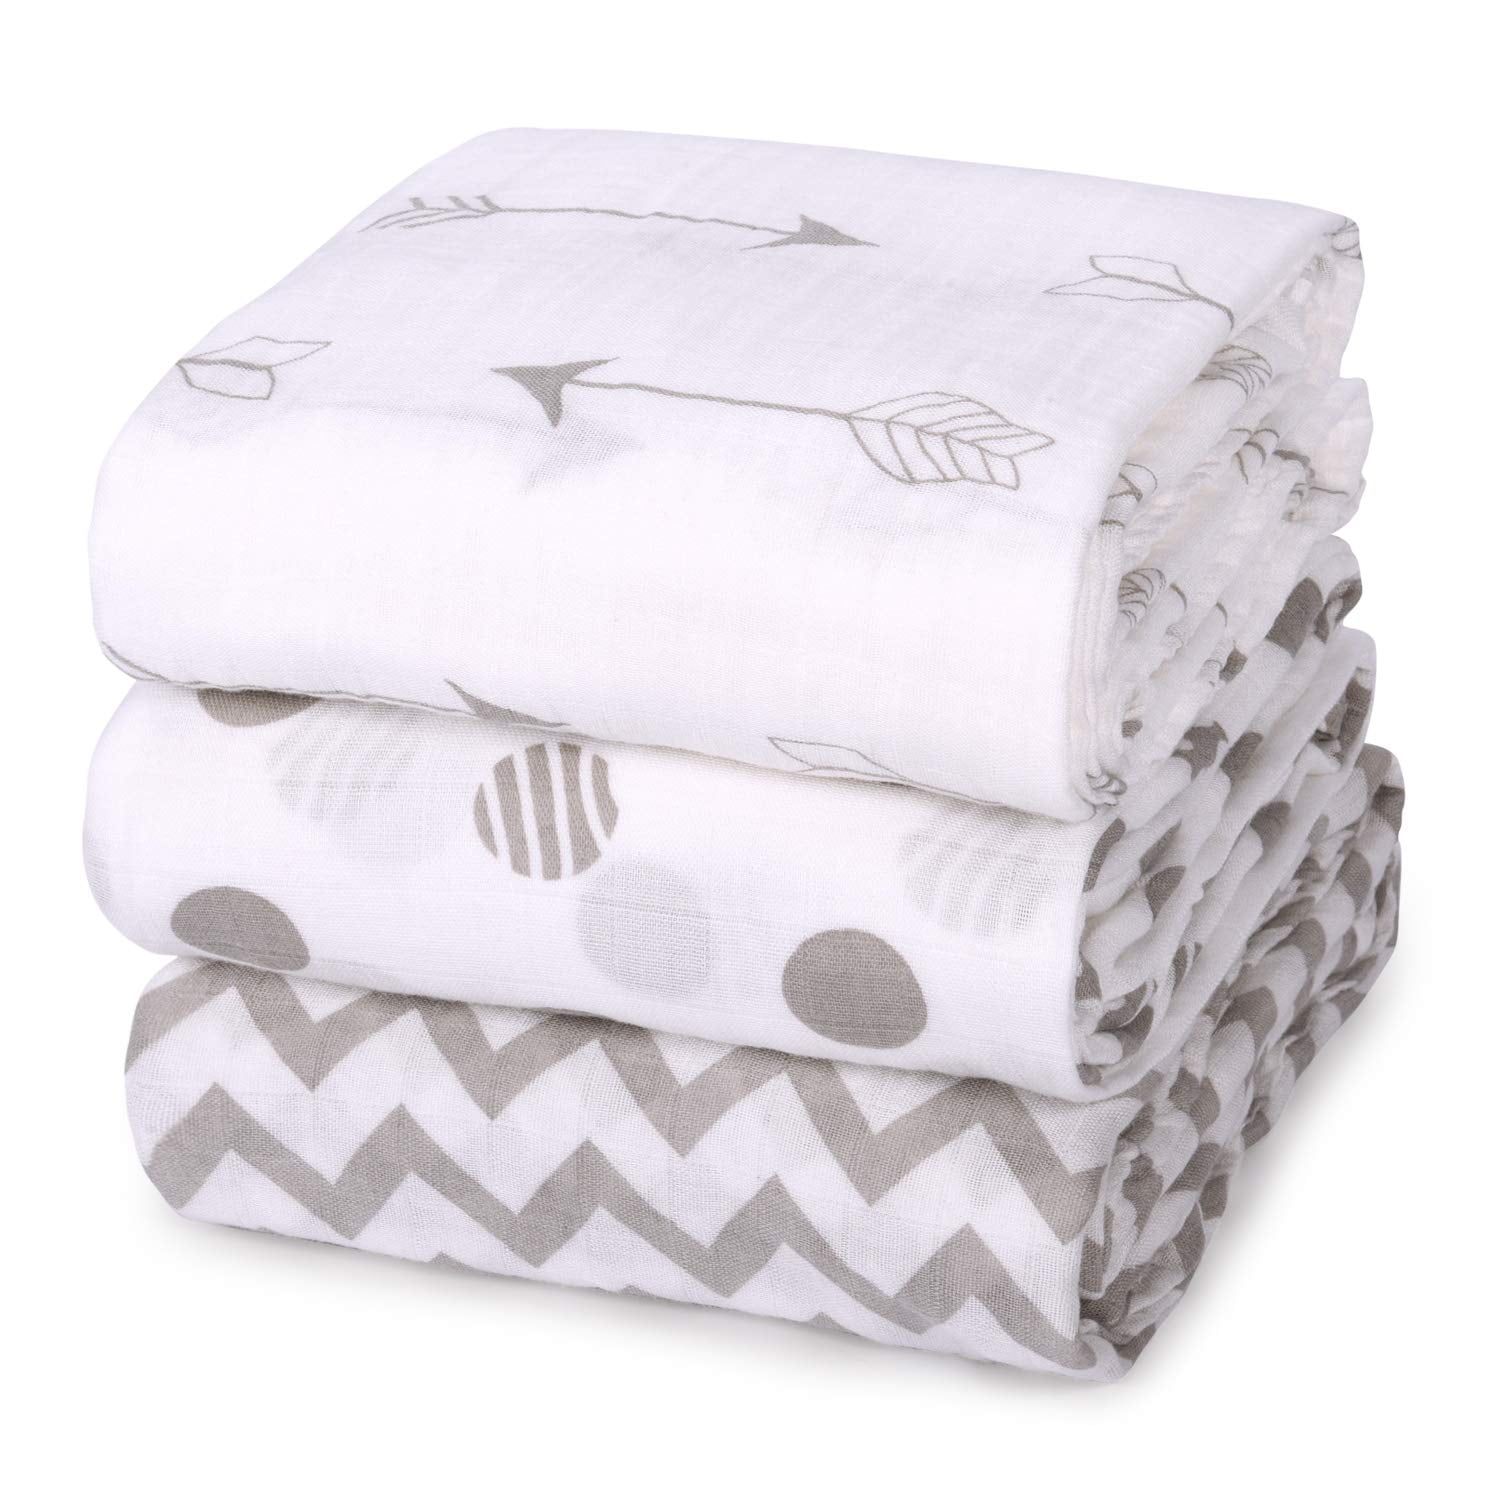 Soft Sleeping Blanket Baby Kids Cotton Muslin Swaddle Wrap Bath Towel Bath CS 